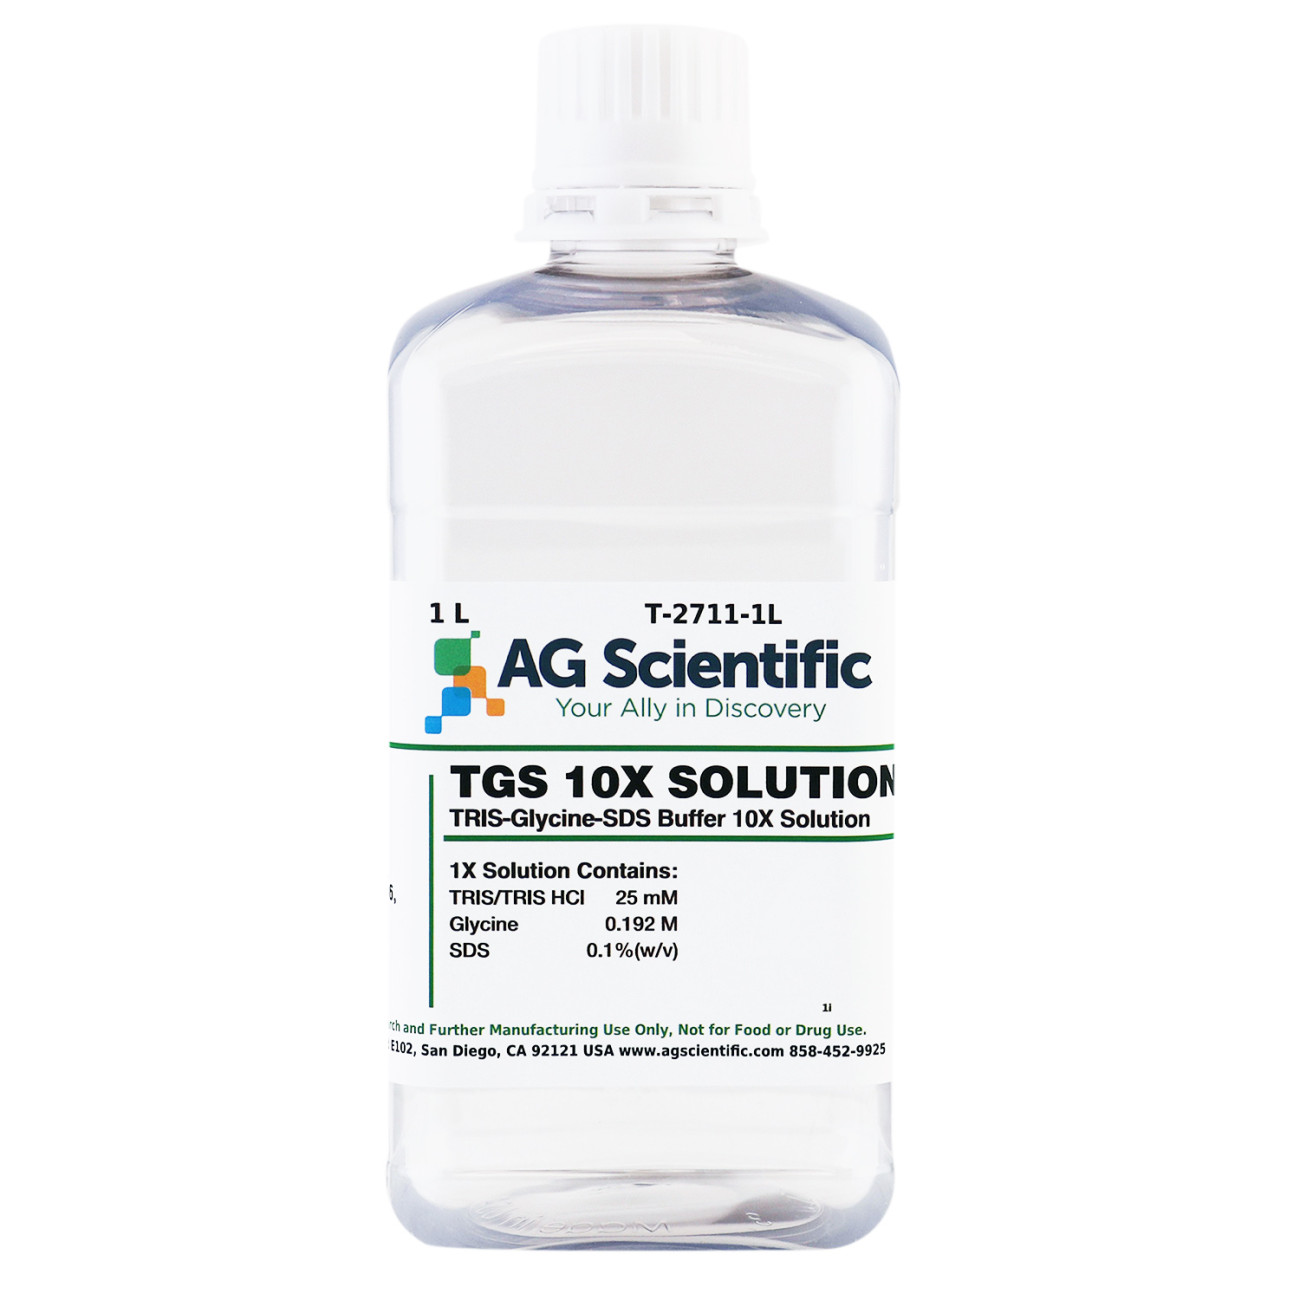 TGS [TRIS-Glycine-SDS] Buffer 10X Solution, 1 L